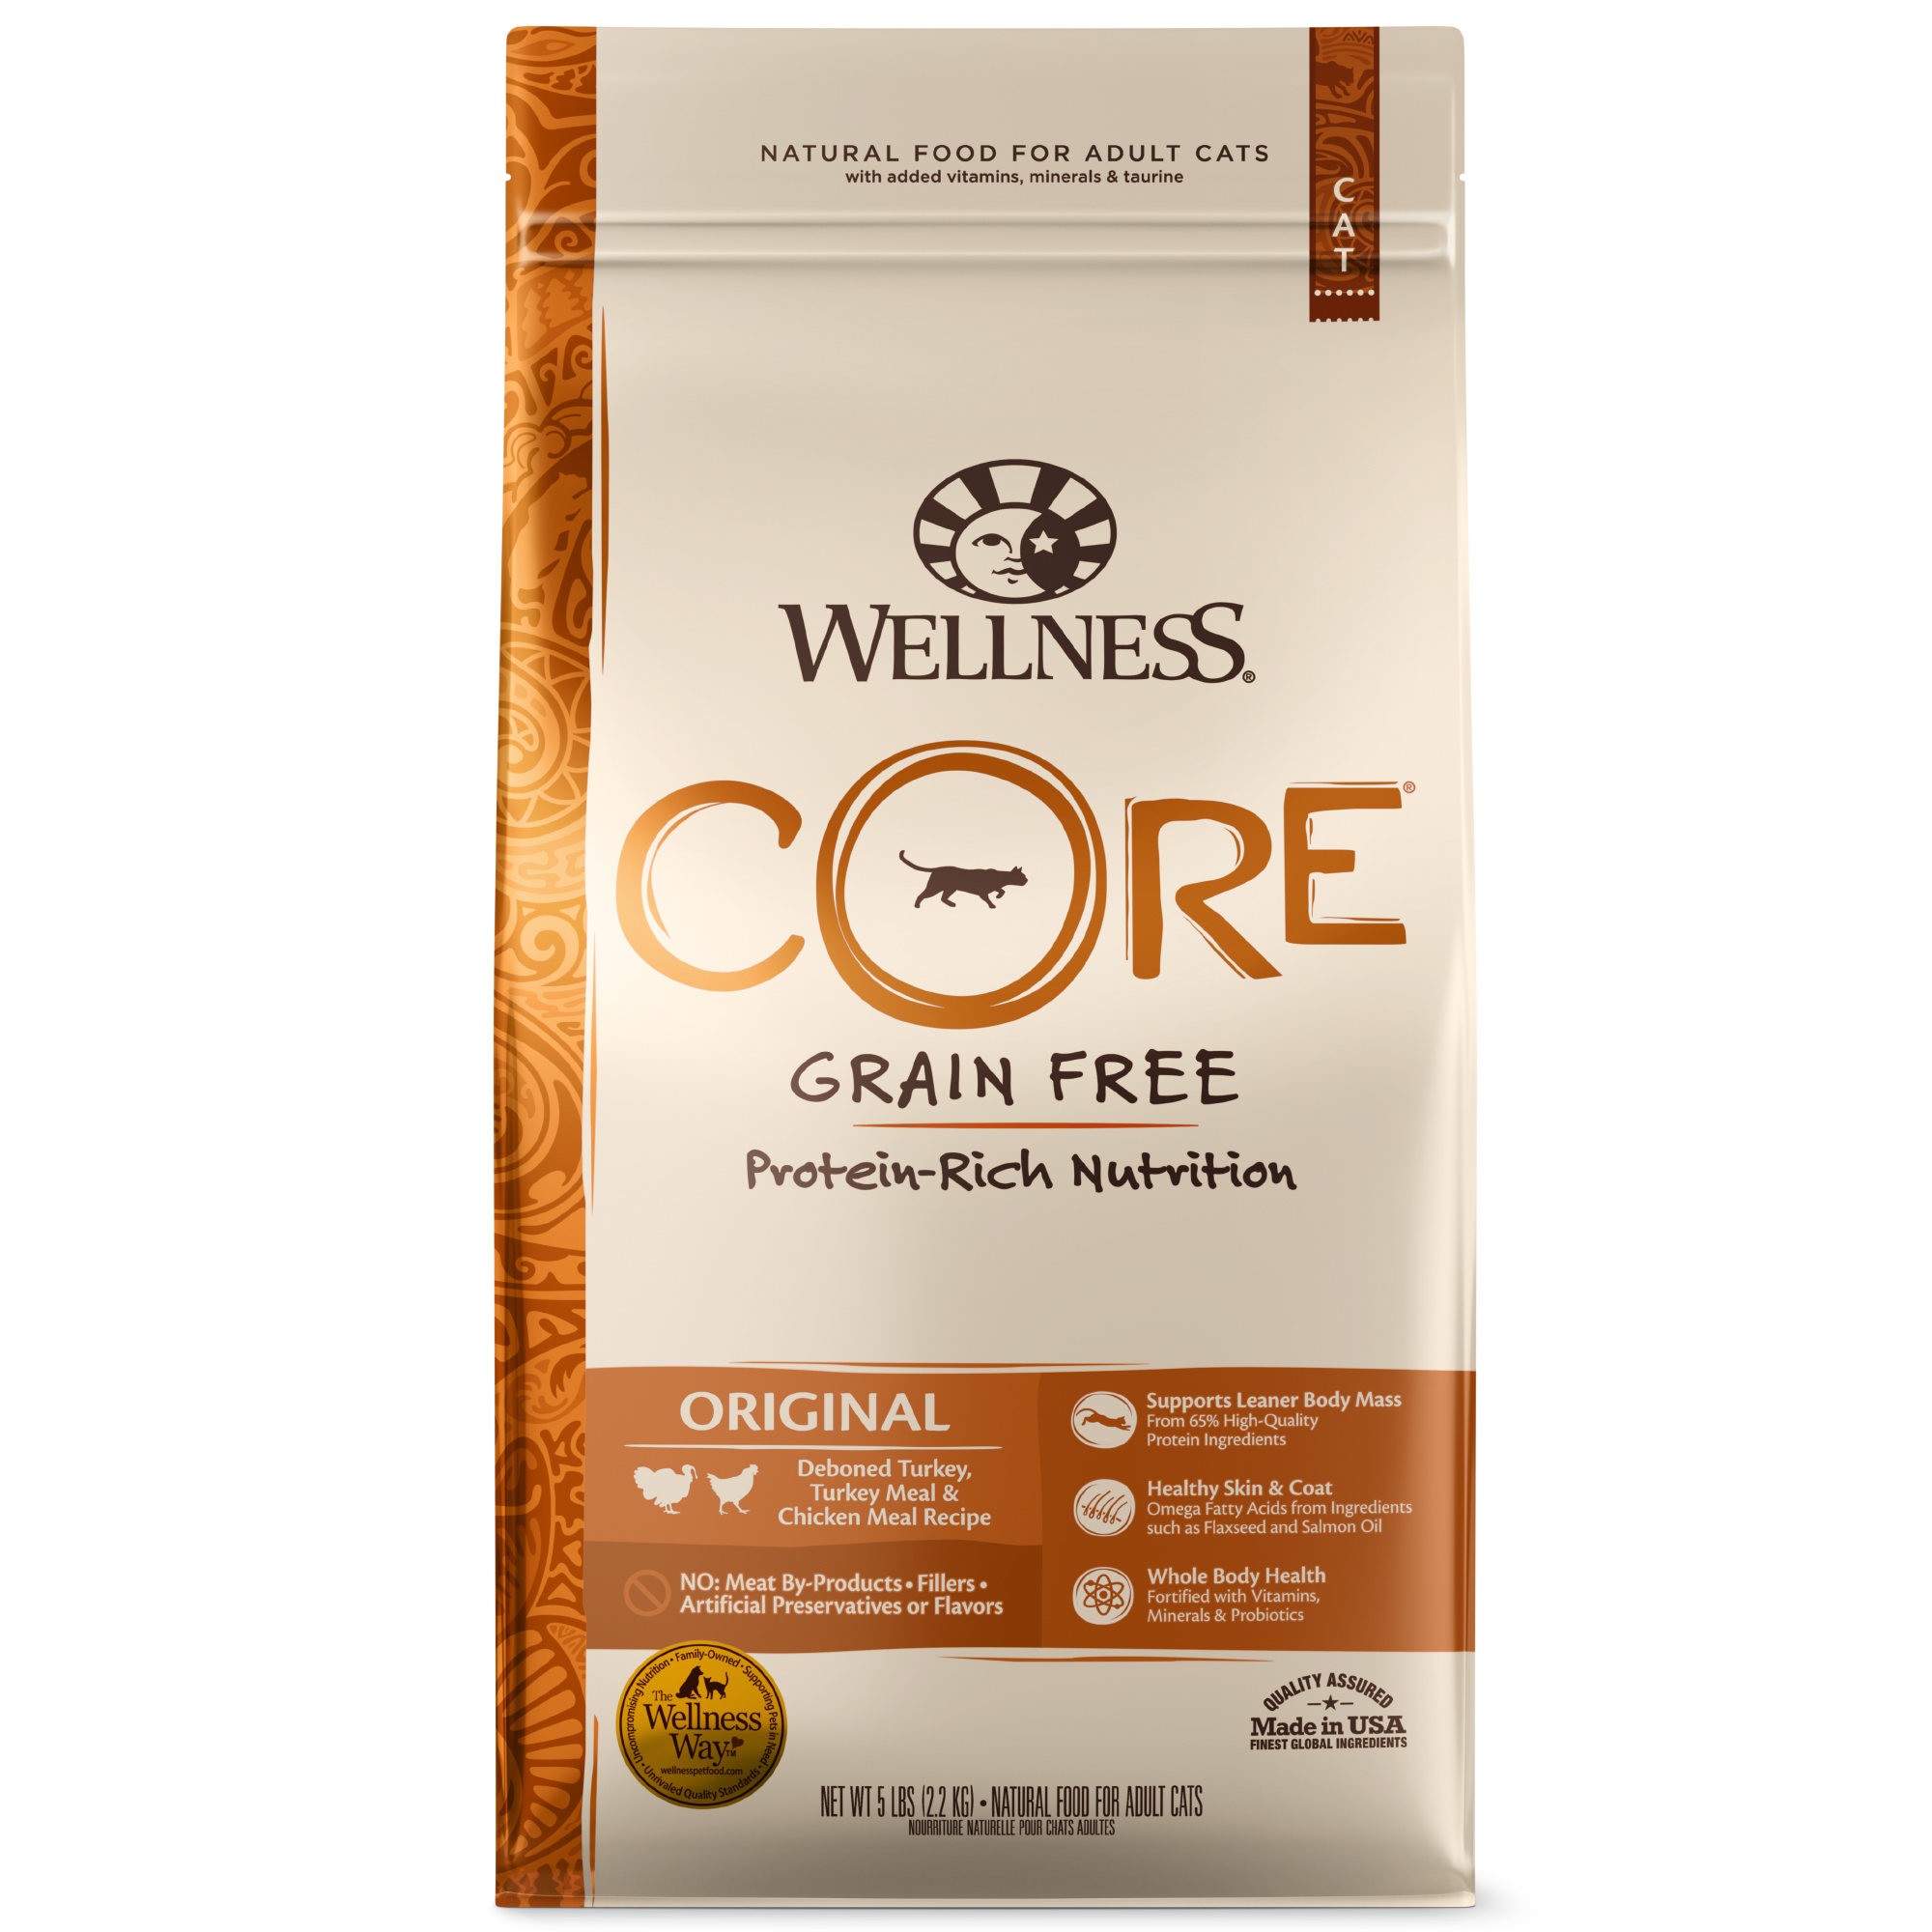 Wellness CORE Grain-Free Original Formula Dry Cat Food, 5 Pound Bag - image 1 of 7